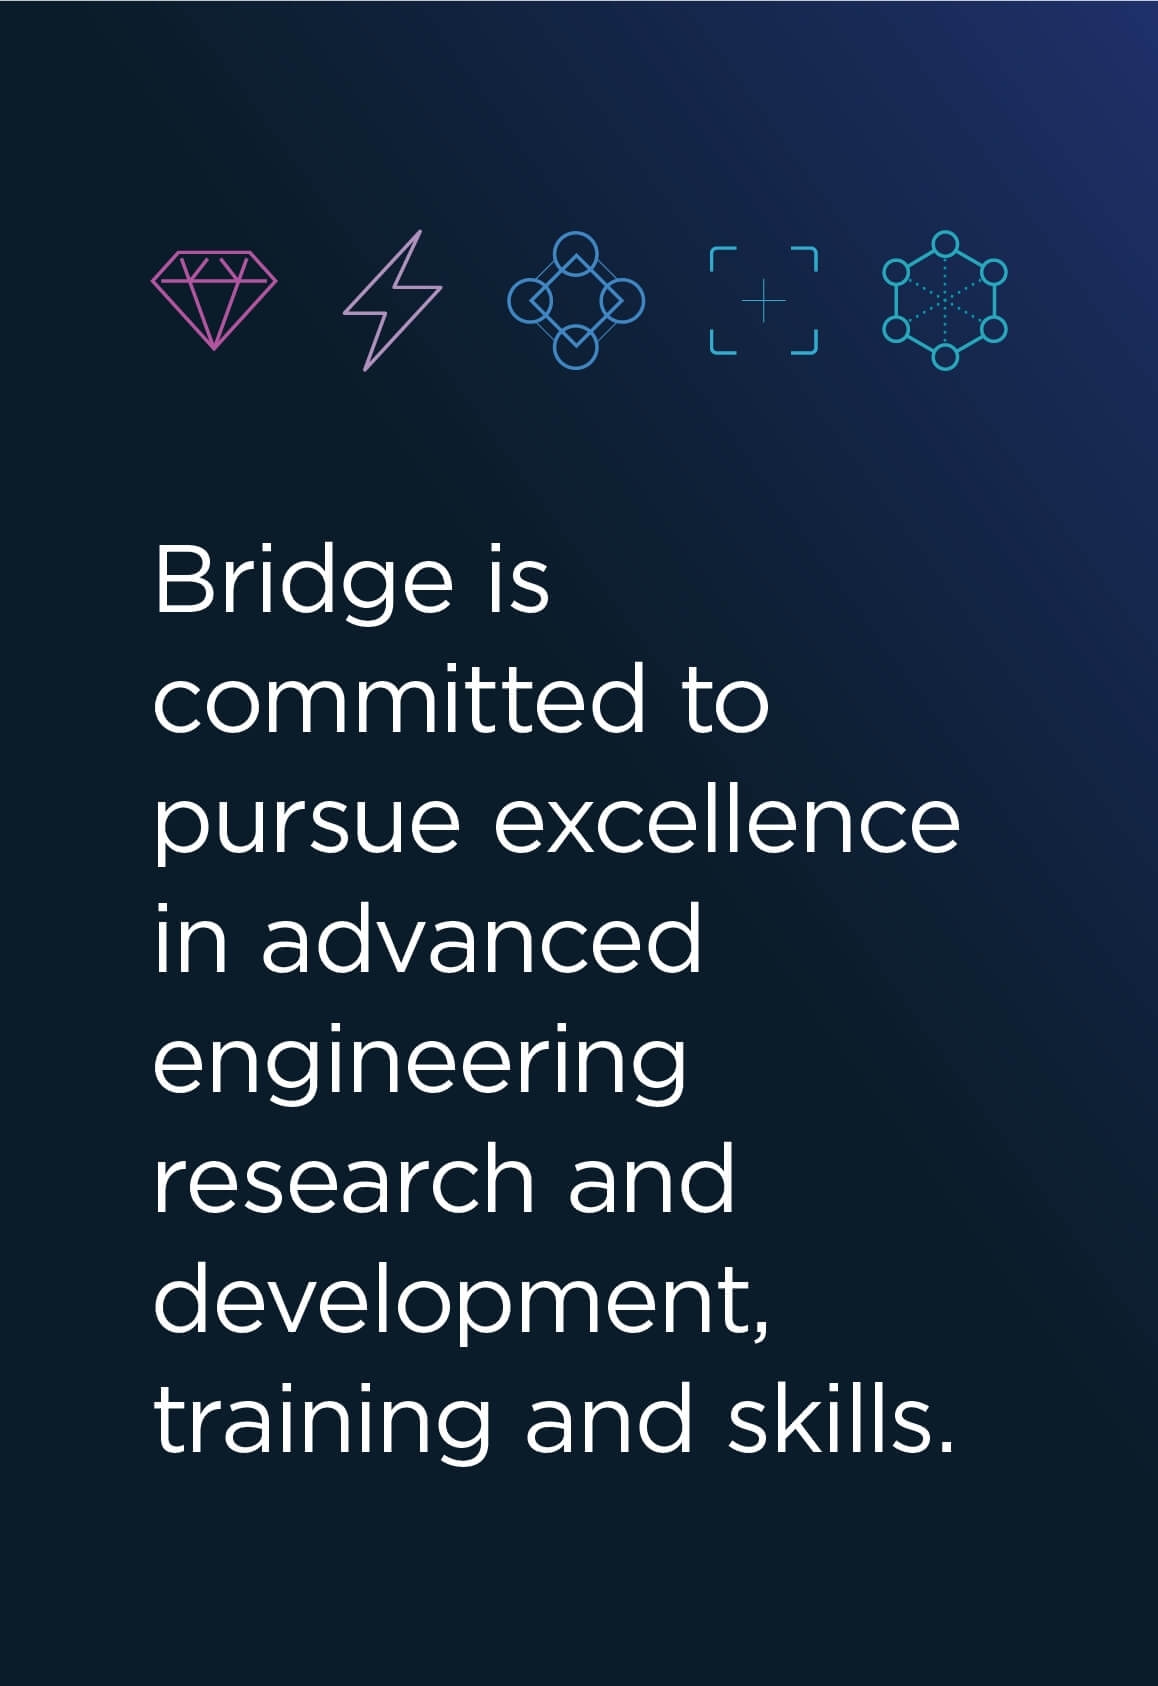 Bridge_Branding_Vision_two_column_image.jpg